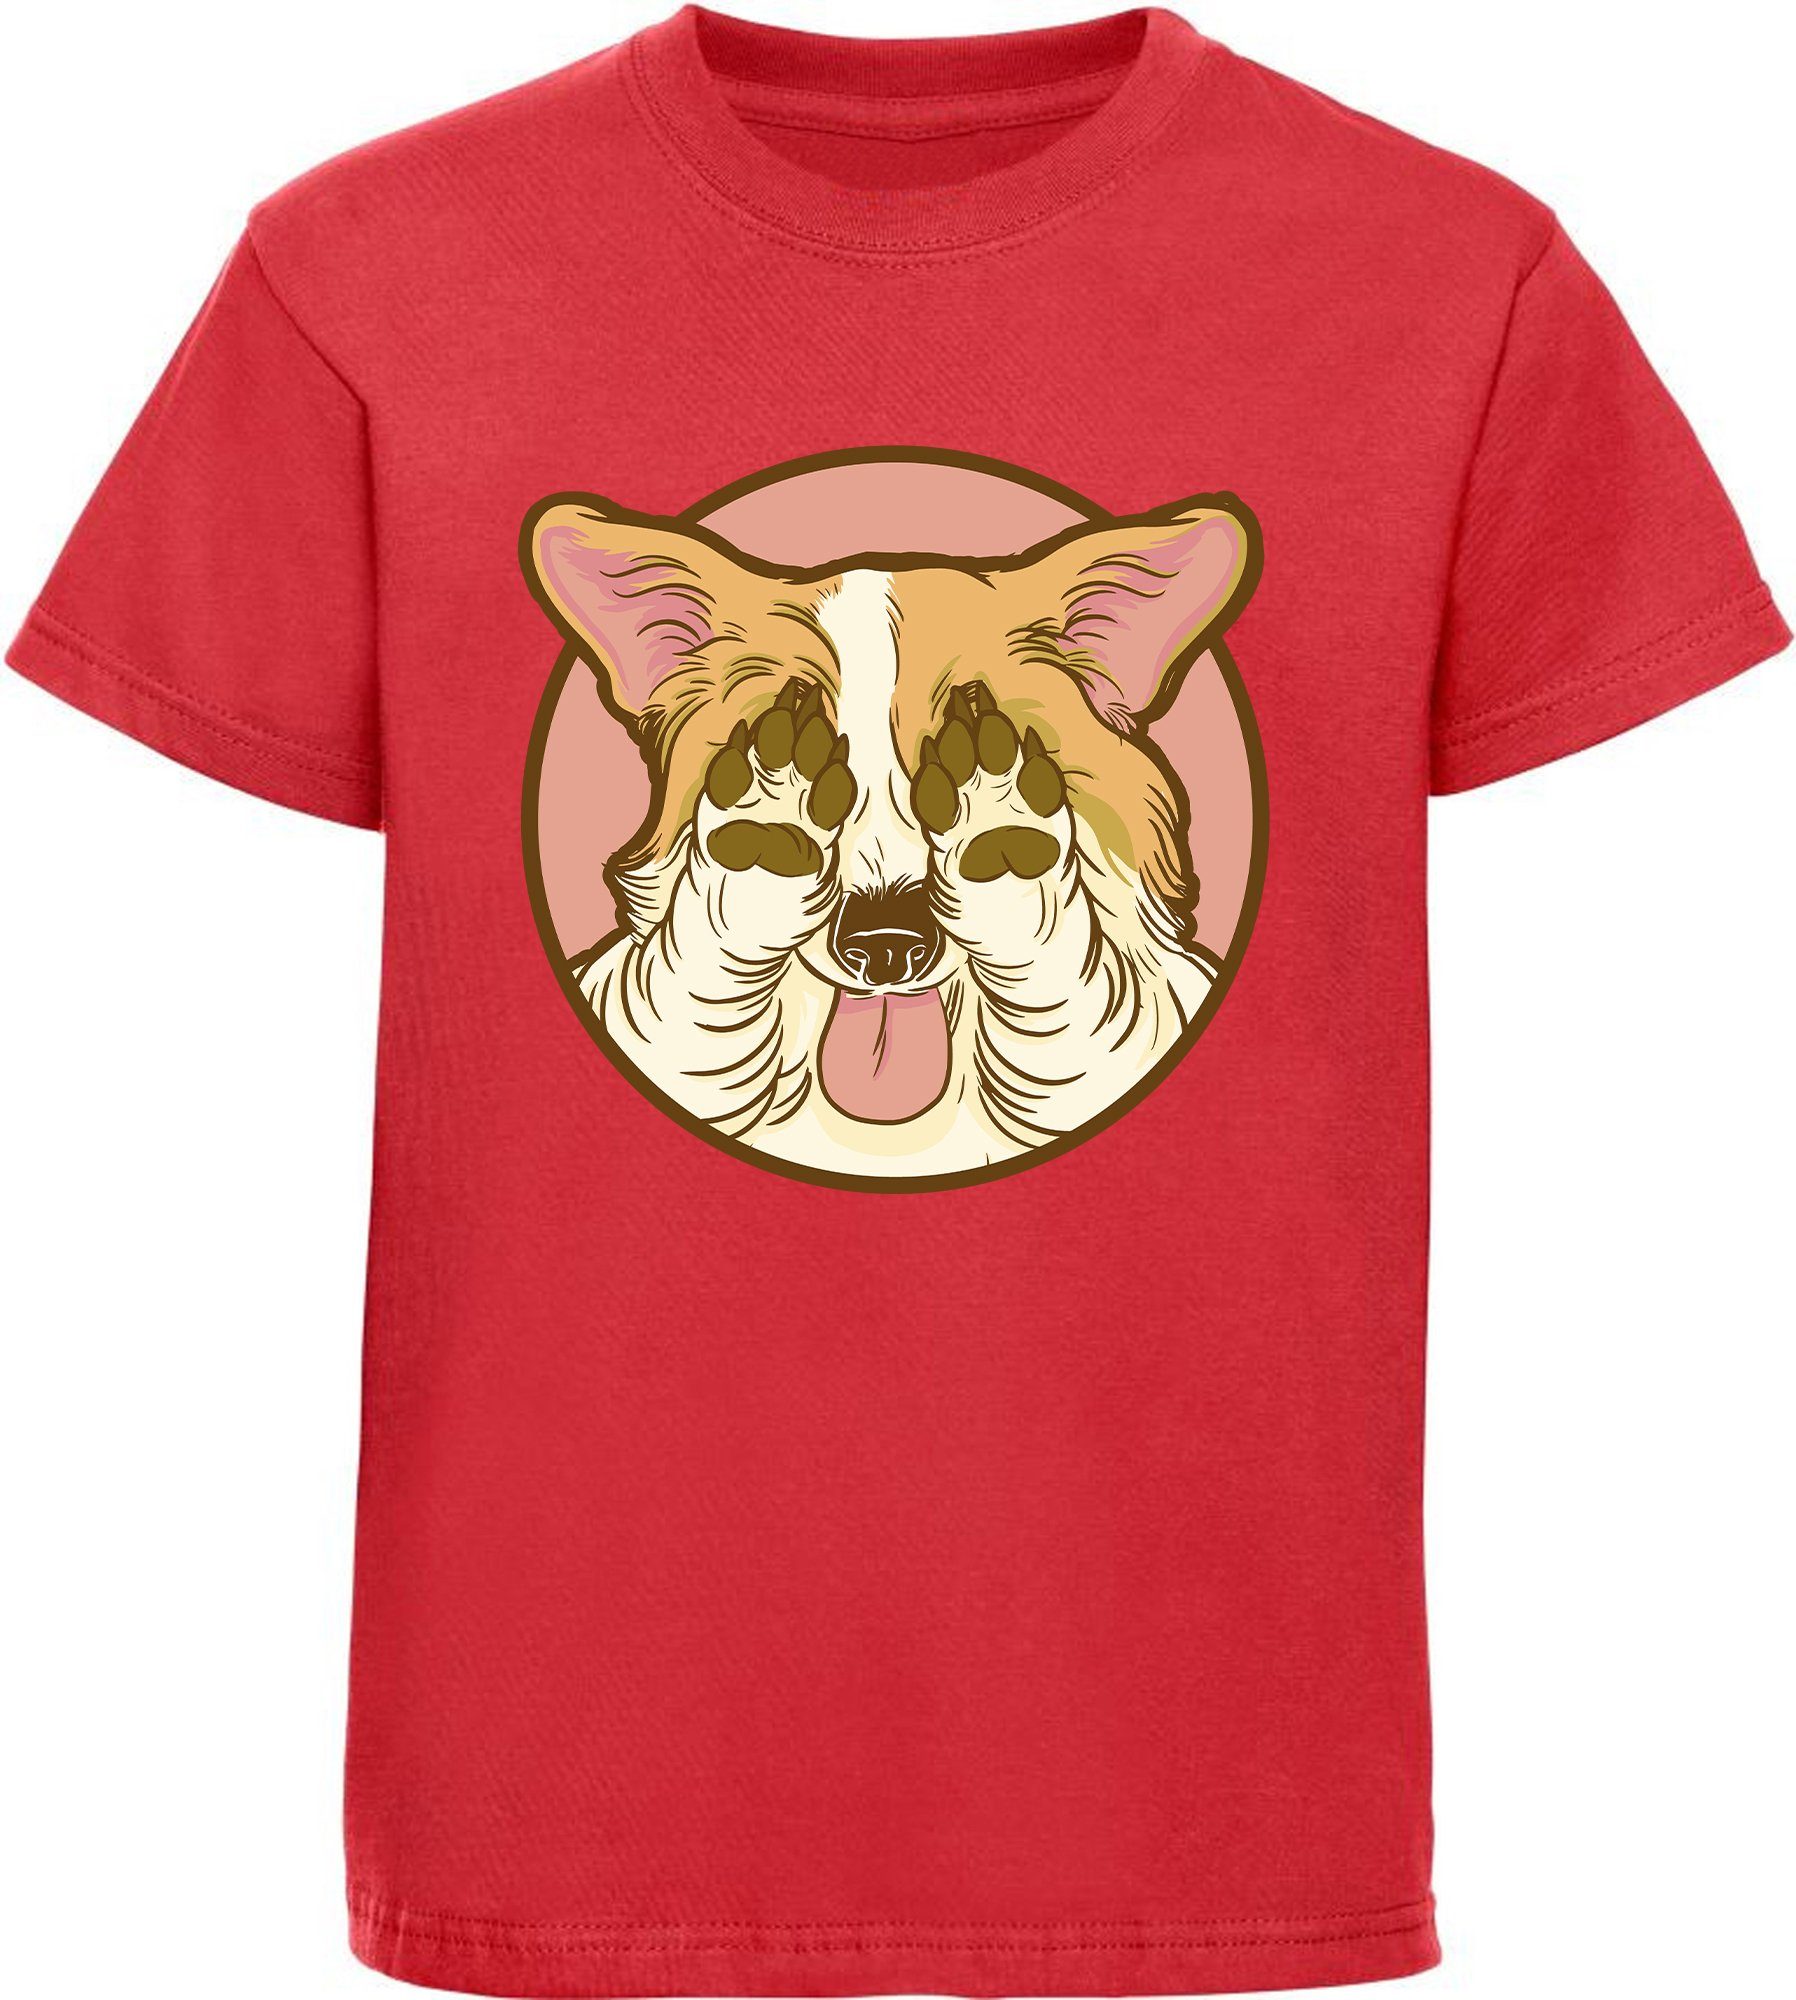 MyDesign24 Print-Shirt bedrucktes Kinder Hunde T-Shirt - Corgi der seine Augen zu hält Baumwollshirt mit Aufdruck, i226 rot